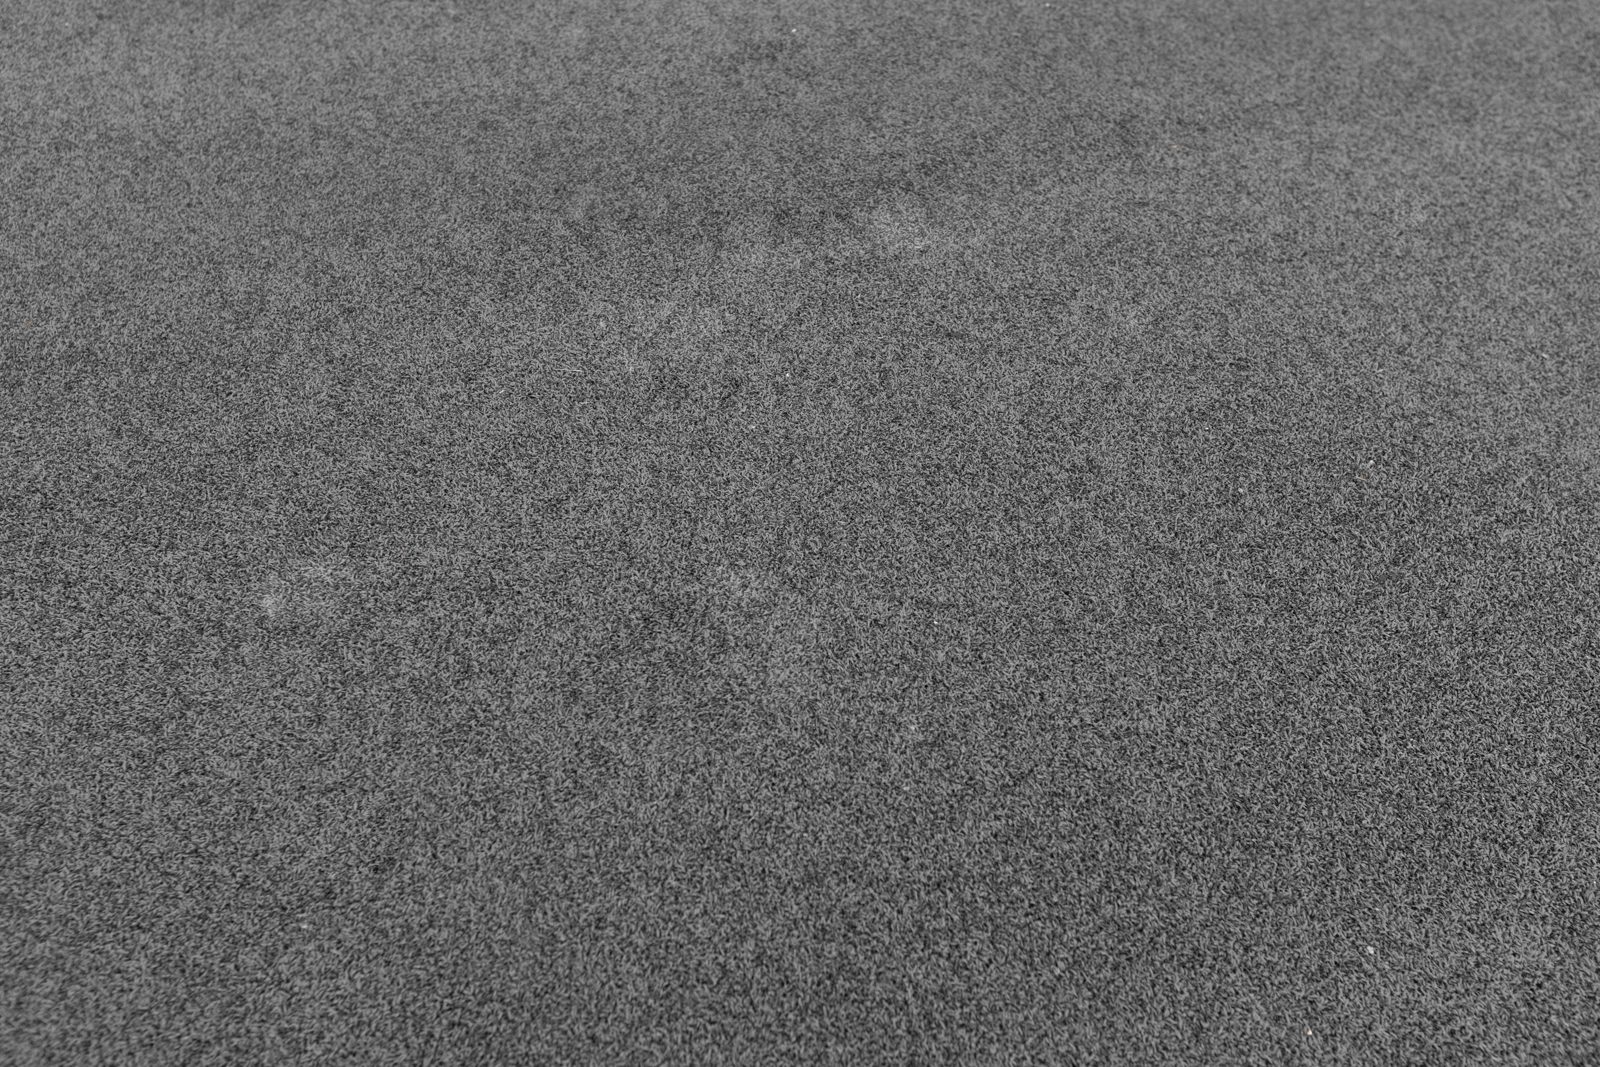 Used - Grass Flooring (dark grey, no markings) - 13x1 m | KingsBox